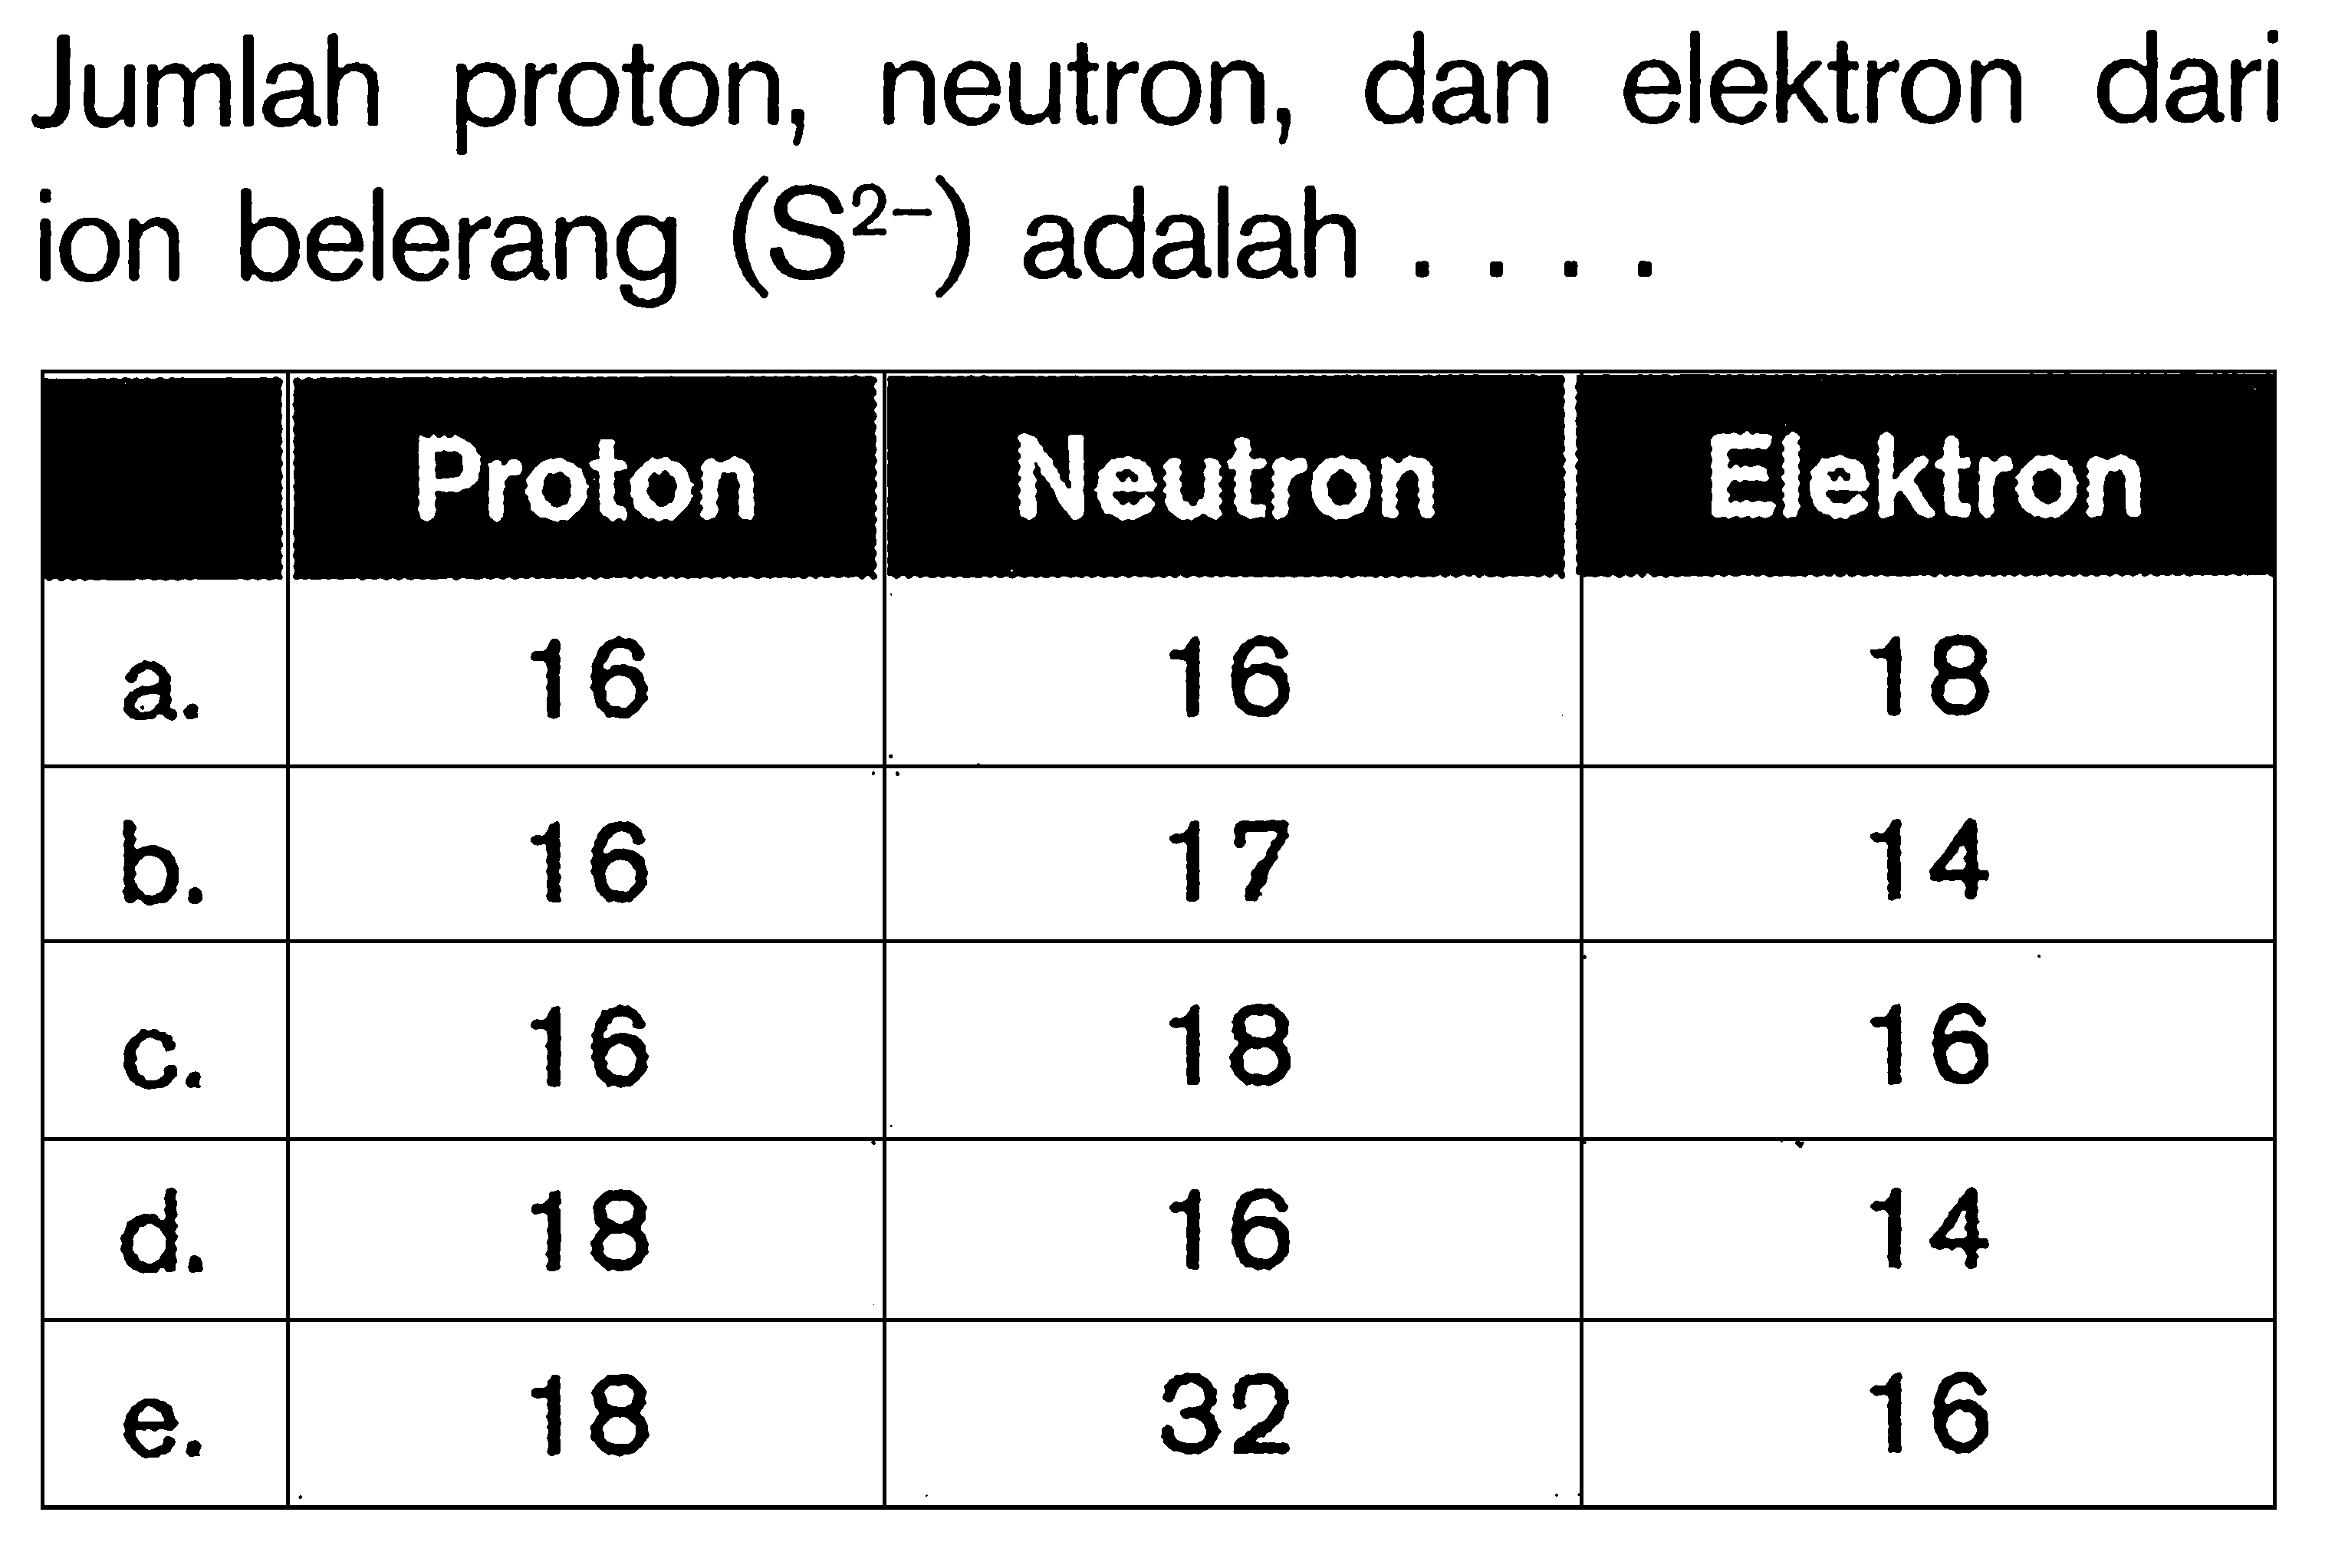 Jumlah proton, neutron, dan elektron dari ion belerang (S^2-) adalah .... Proton Neutron Elektron 